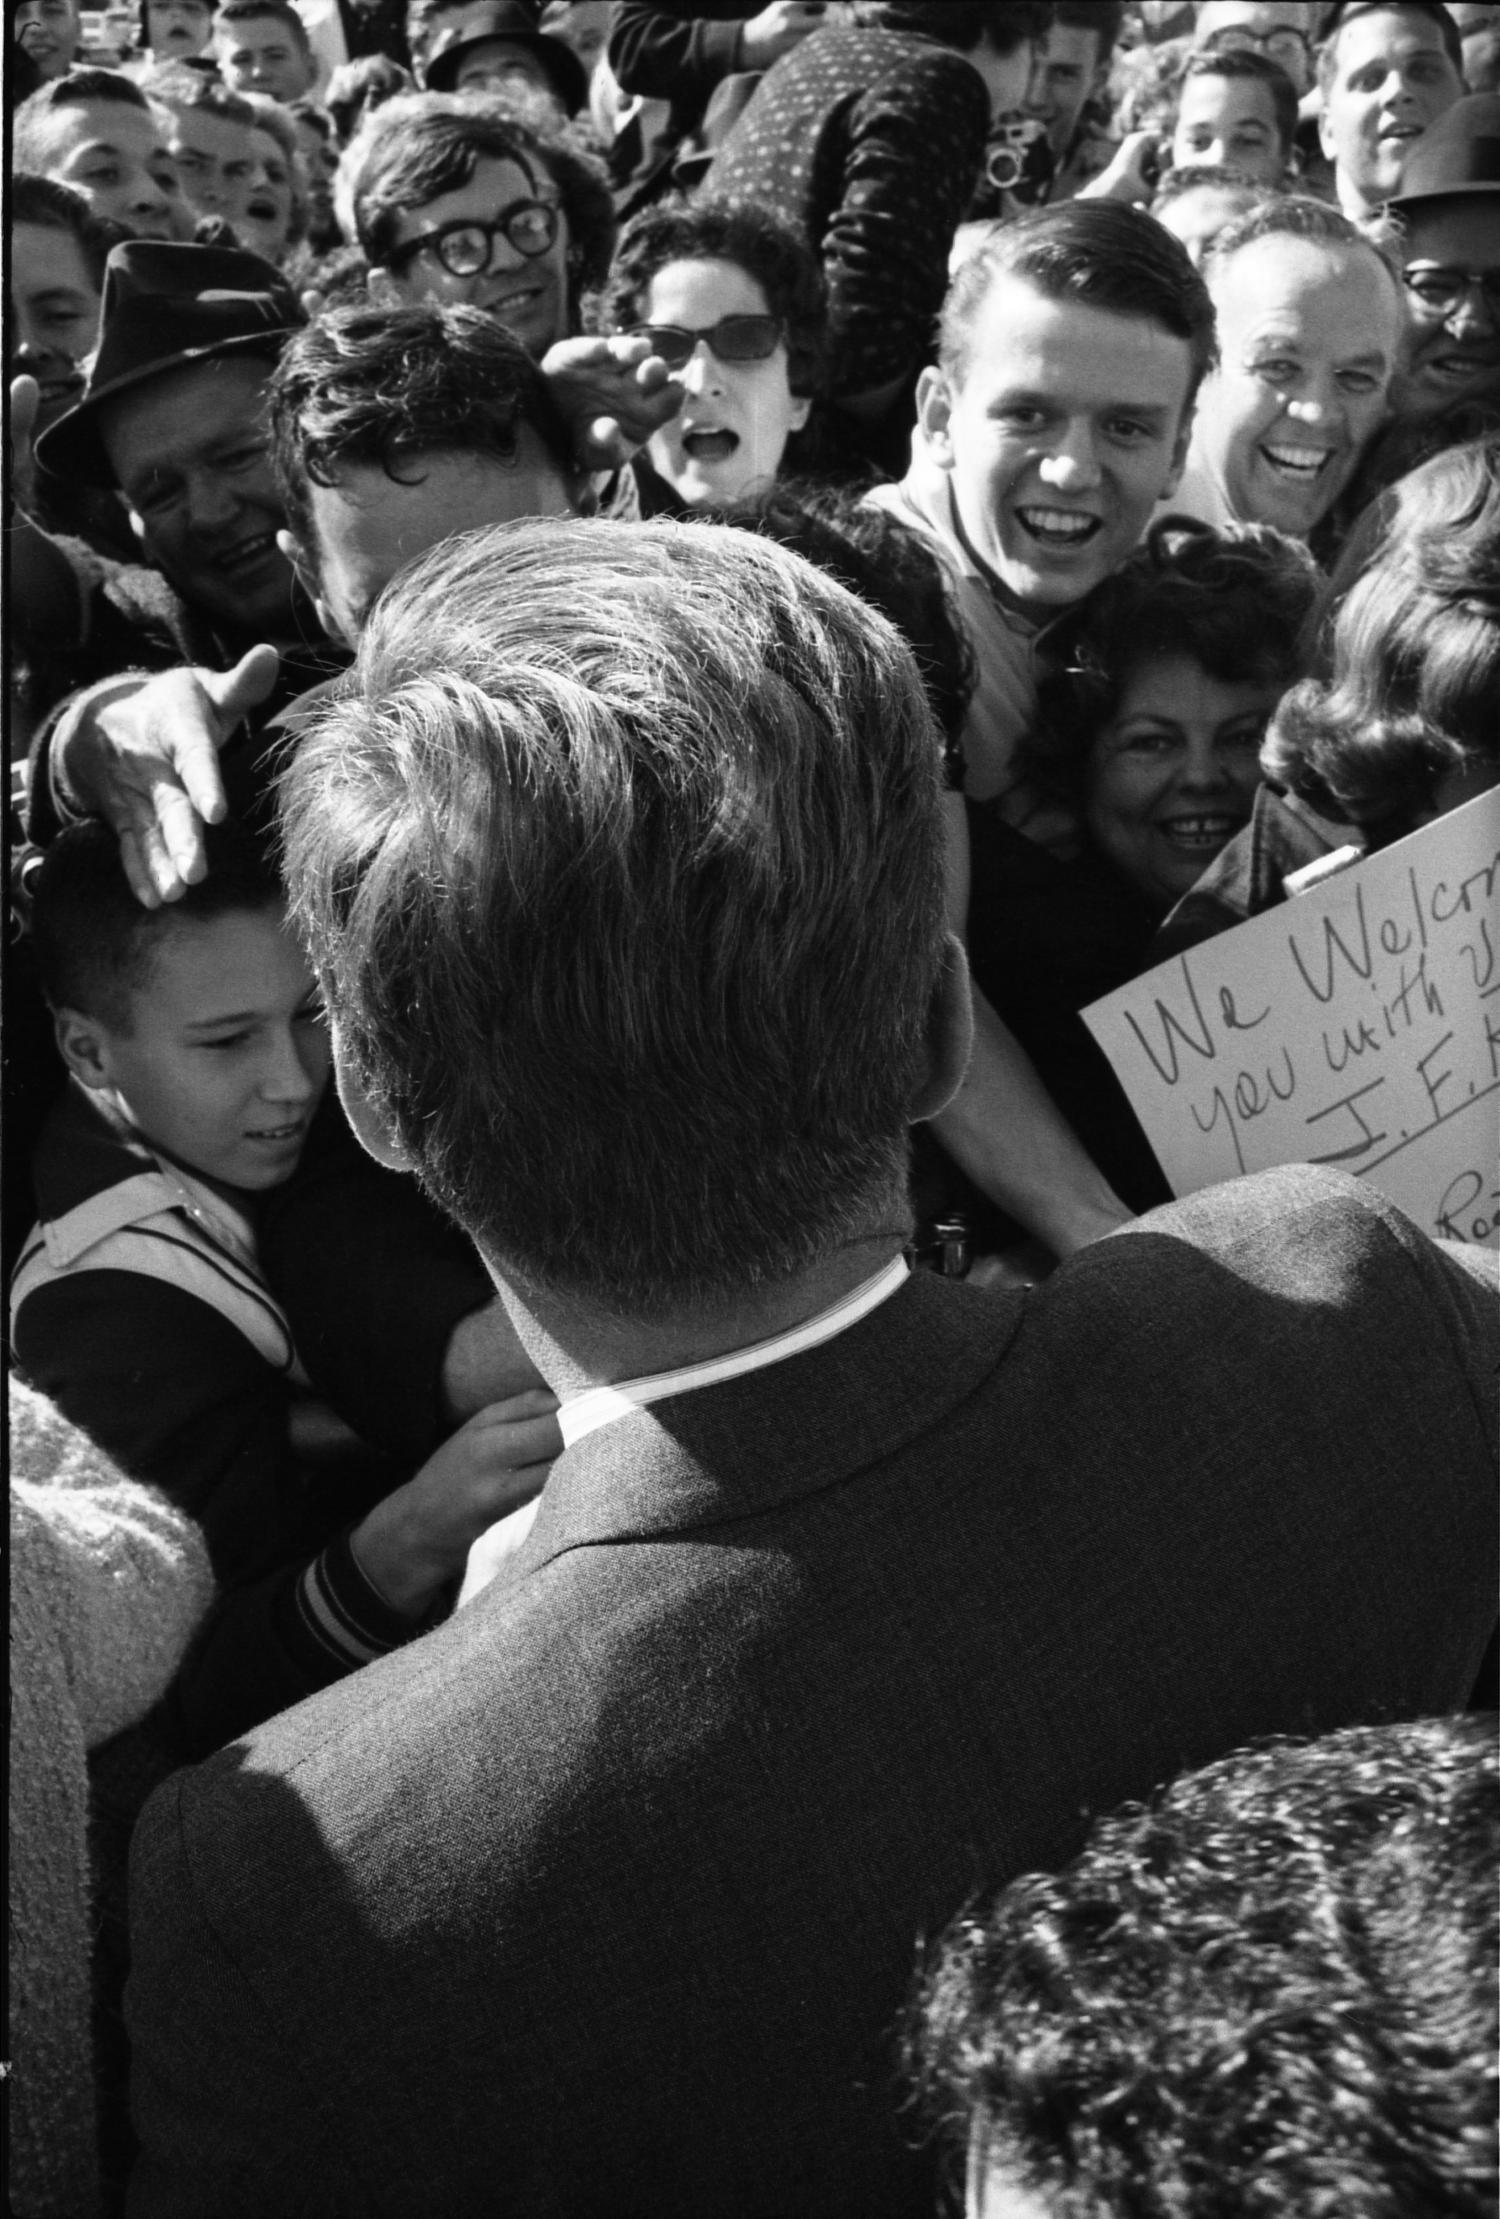 John F Kennedy Greets Crowd In Fort Worth Texas 11x14 Silver Halide Photo Print